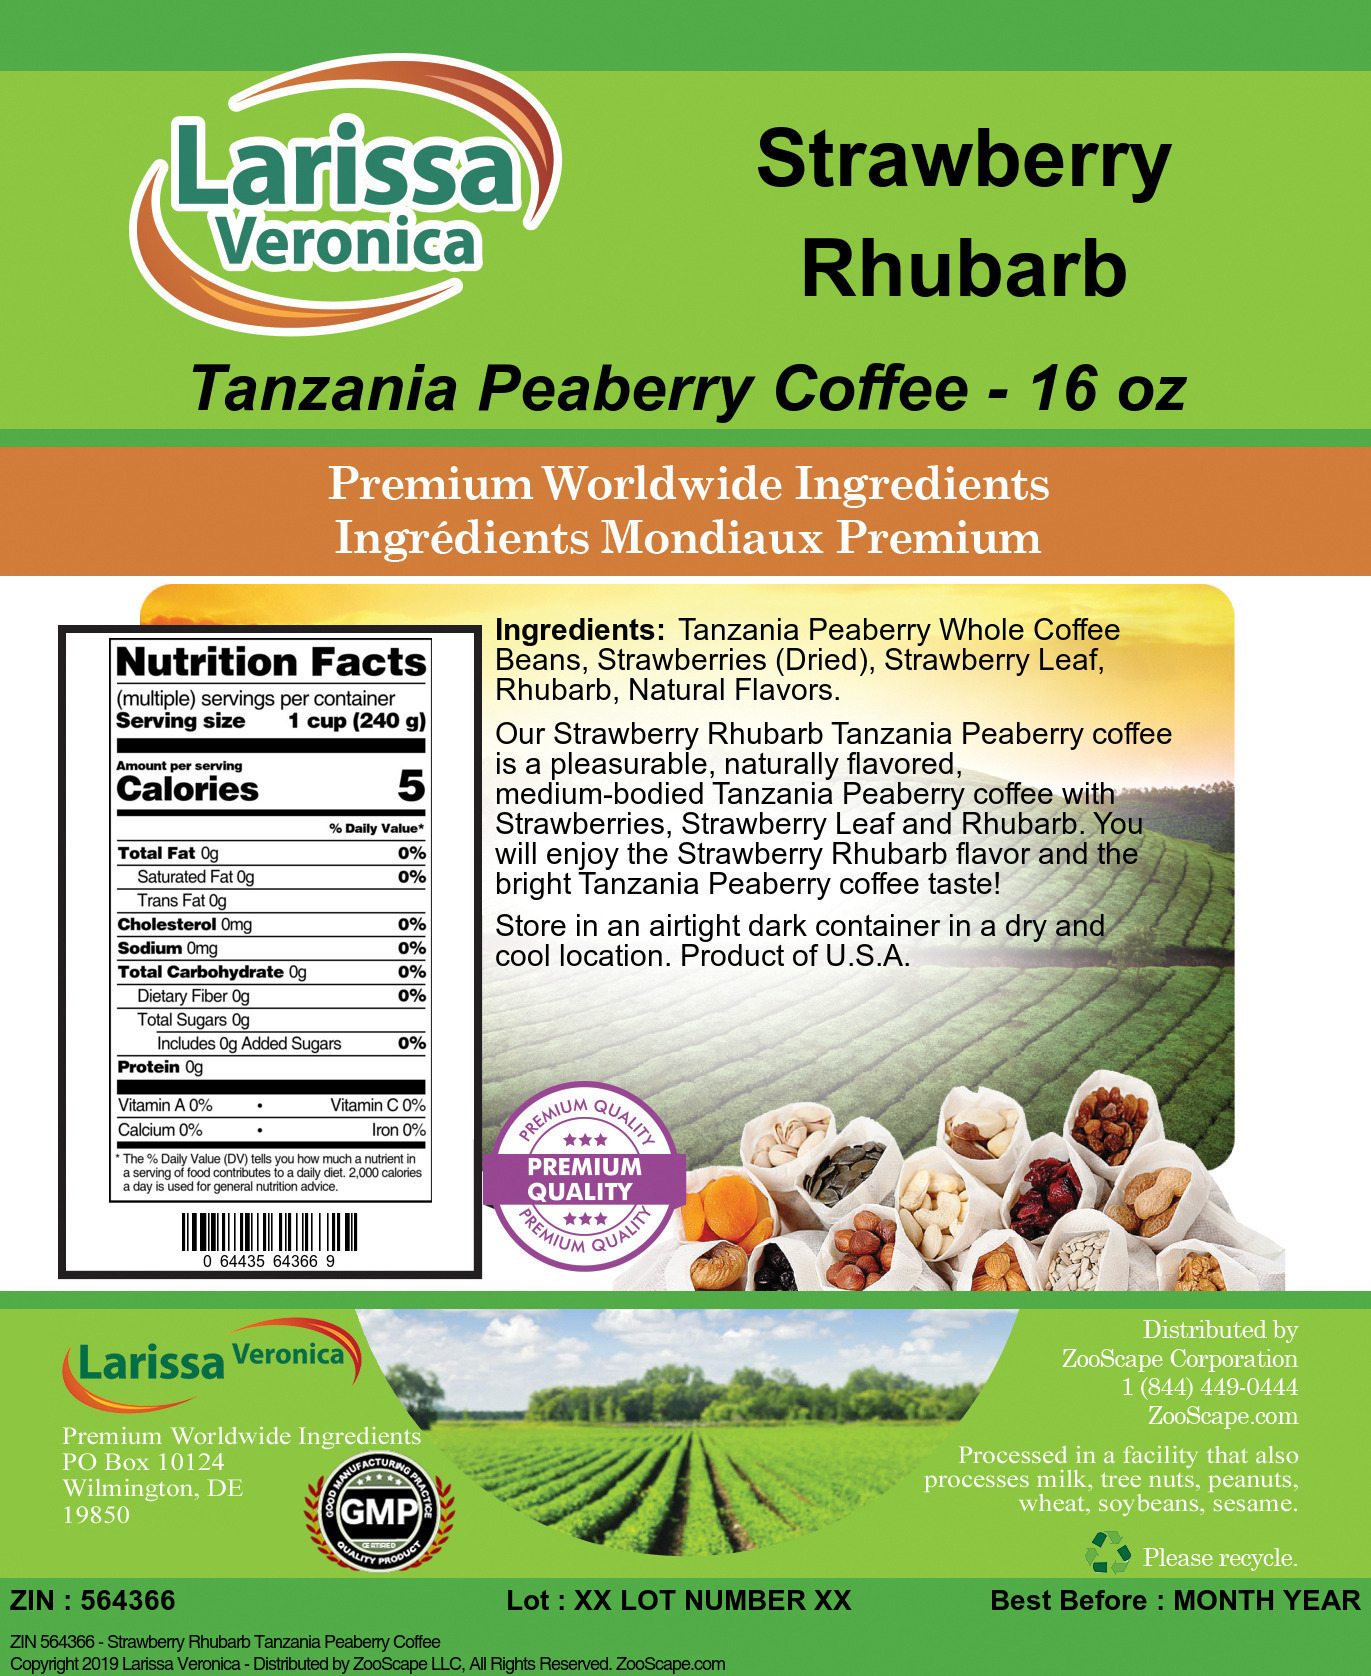 Strawberry Rhubarb Tanzania Peaberry Coffee - Label